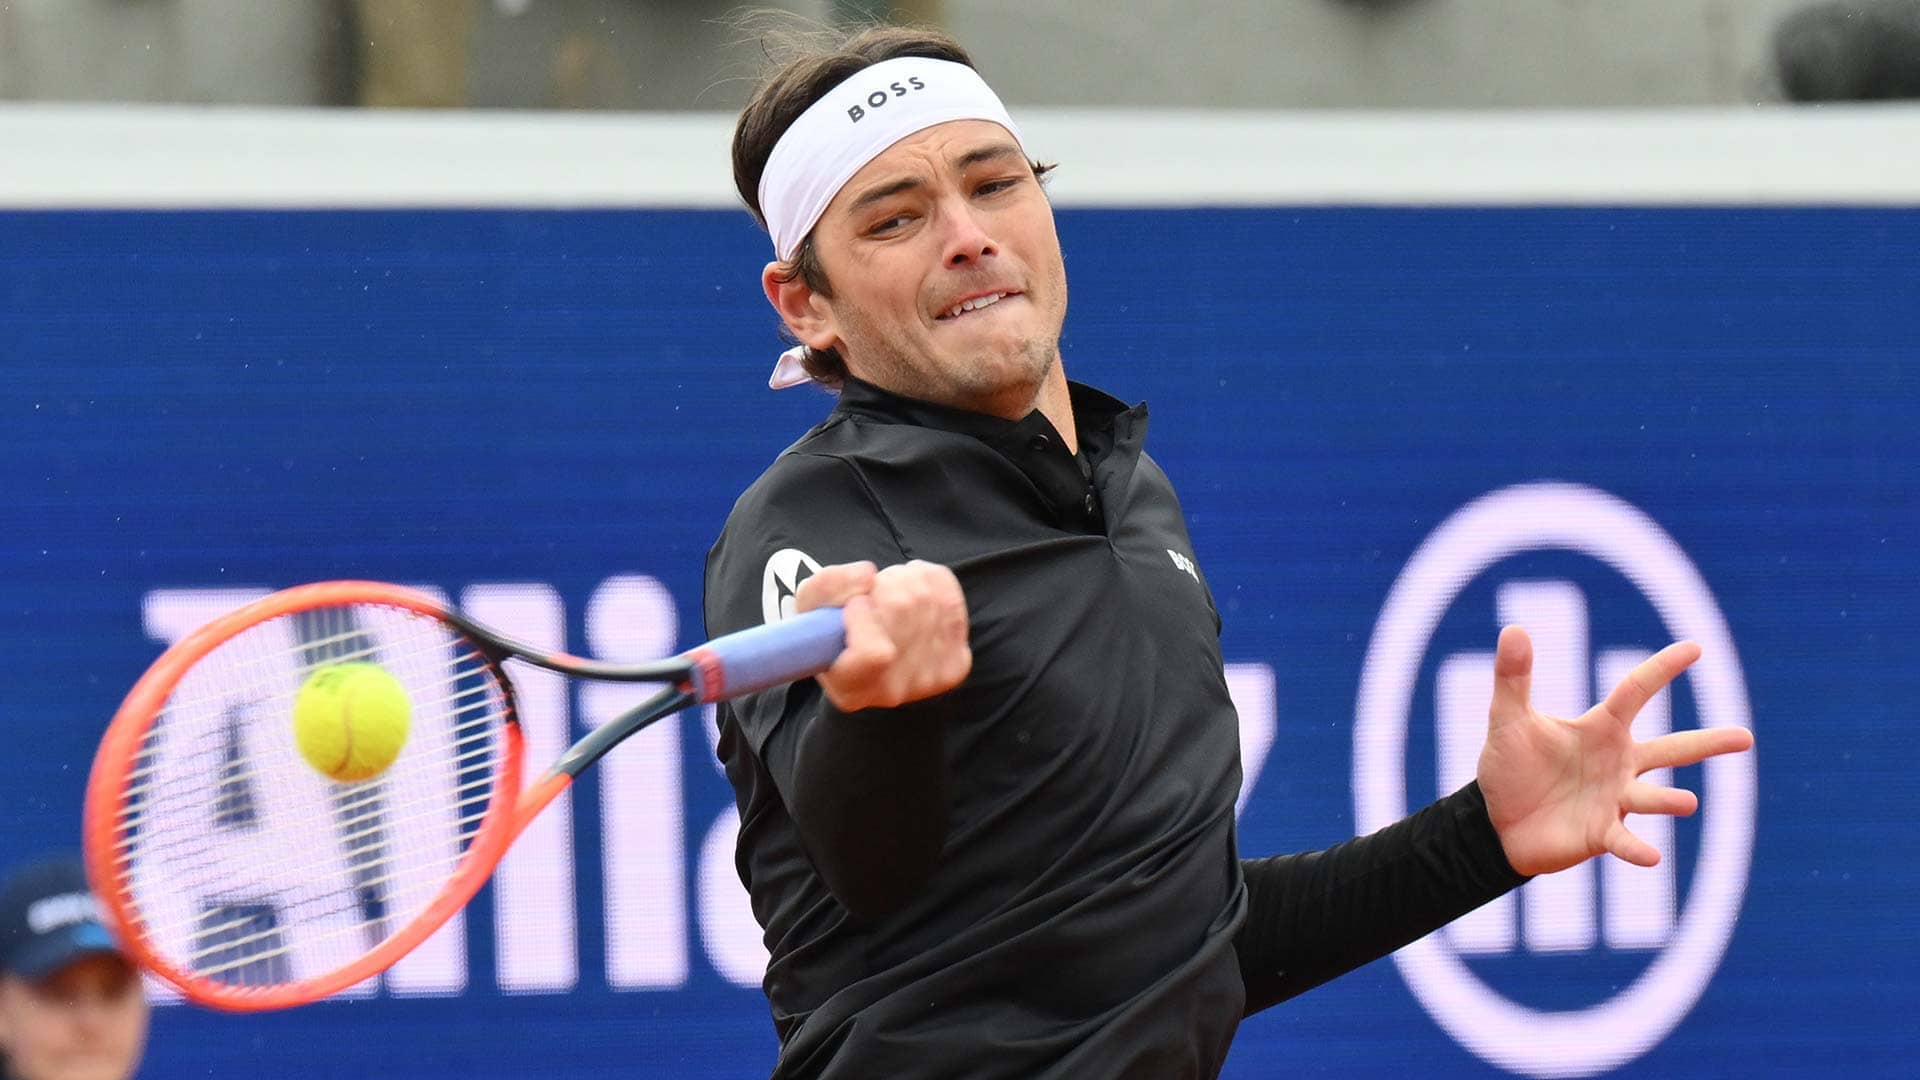 Fritz reaches first clay-court ATP Tour final in Munich, Struff advances